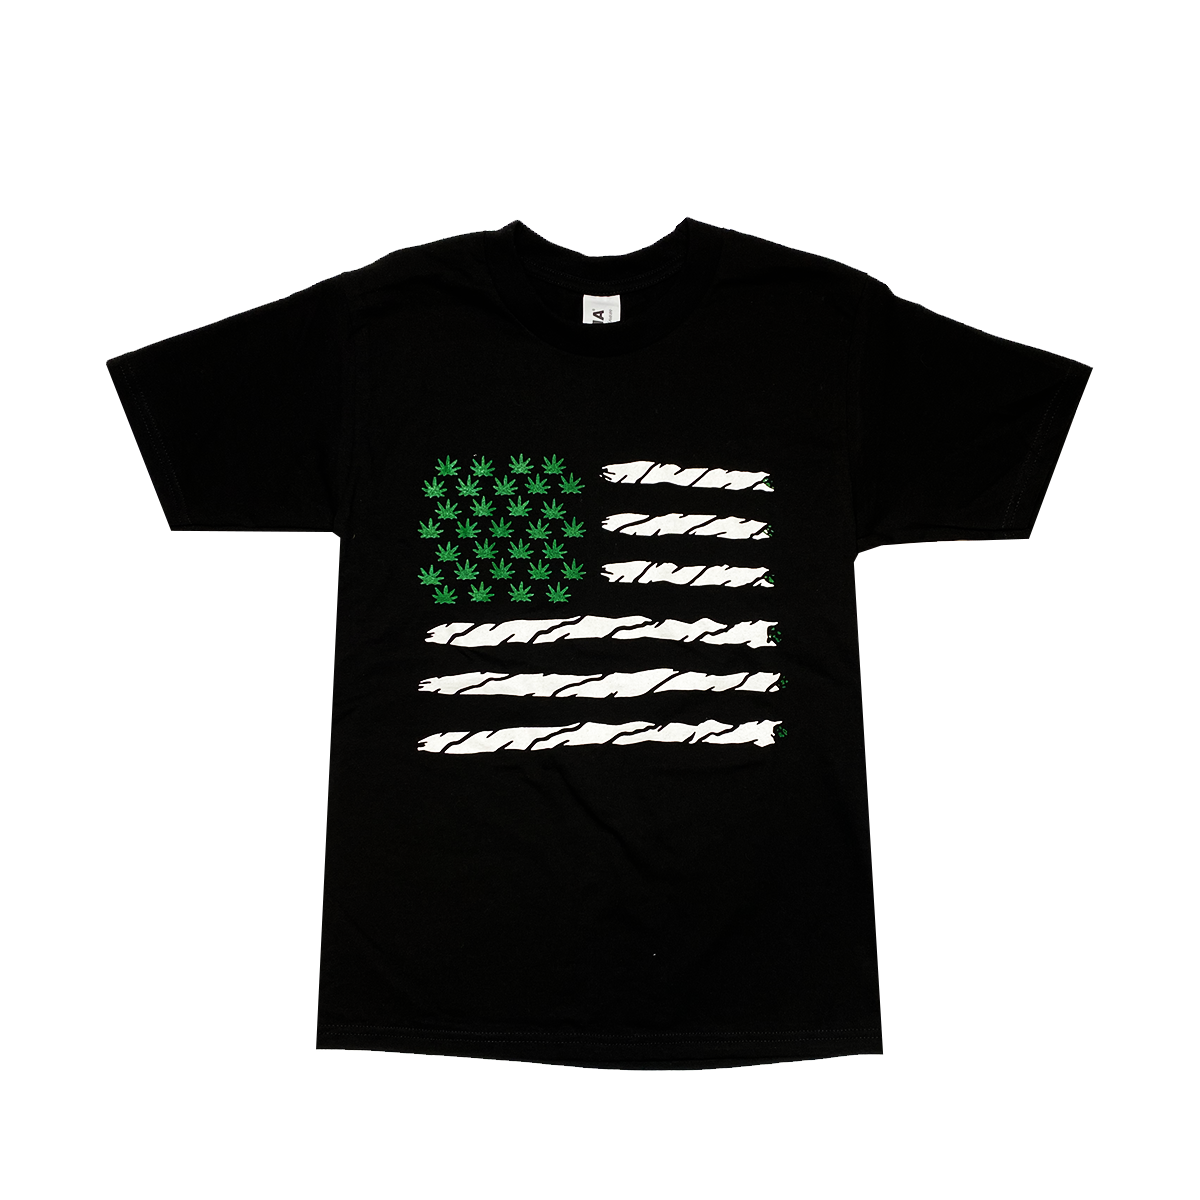 Camiseta Bandera Americana 100% Algodón, Pack de 5 Unidades, S, M, L, XL, XXL